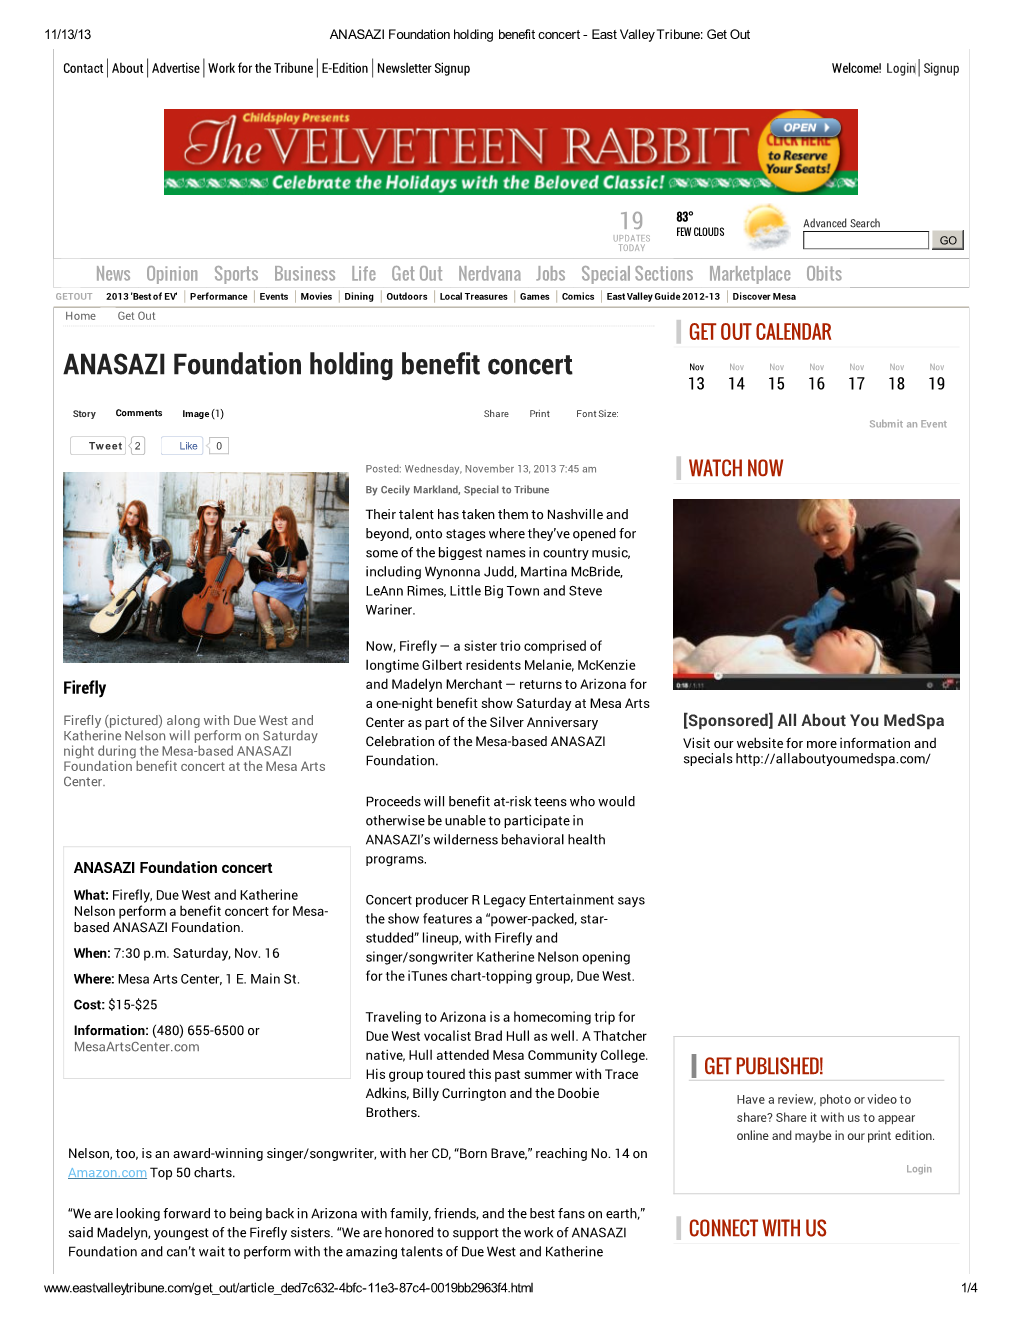 ANASAZI Foundation Holding Benefit Concert - East Valley Tribune: Get Out